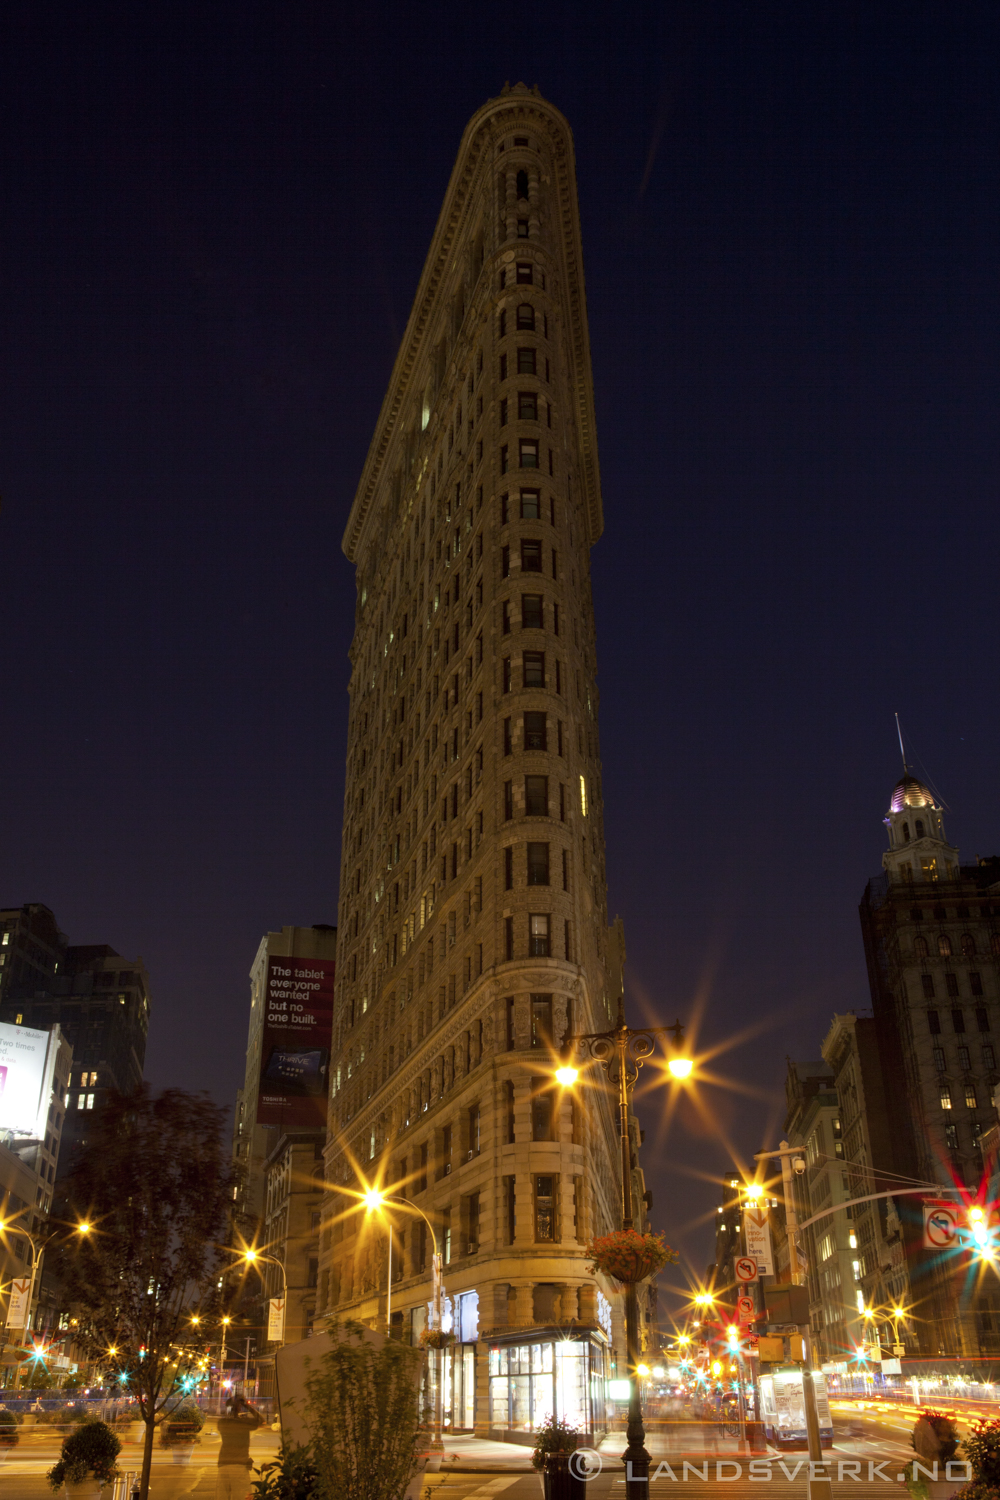 The Flat Iron Building, Manhattan, New York. 

(Canon EOS 5D Mark II / Canon EF 24-70mm f/2.8 L USM)